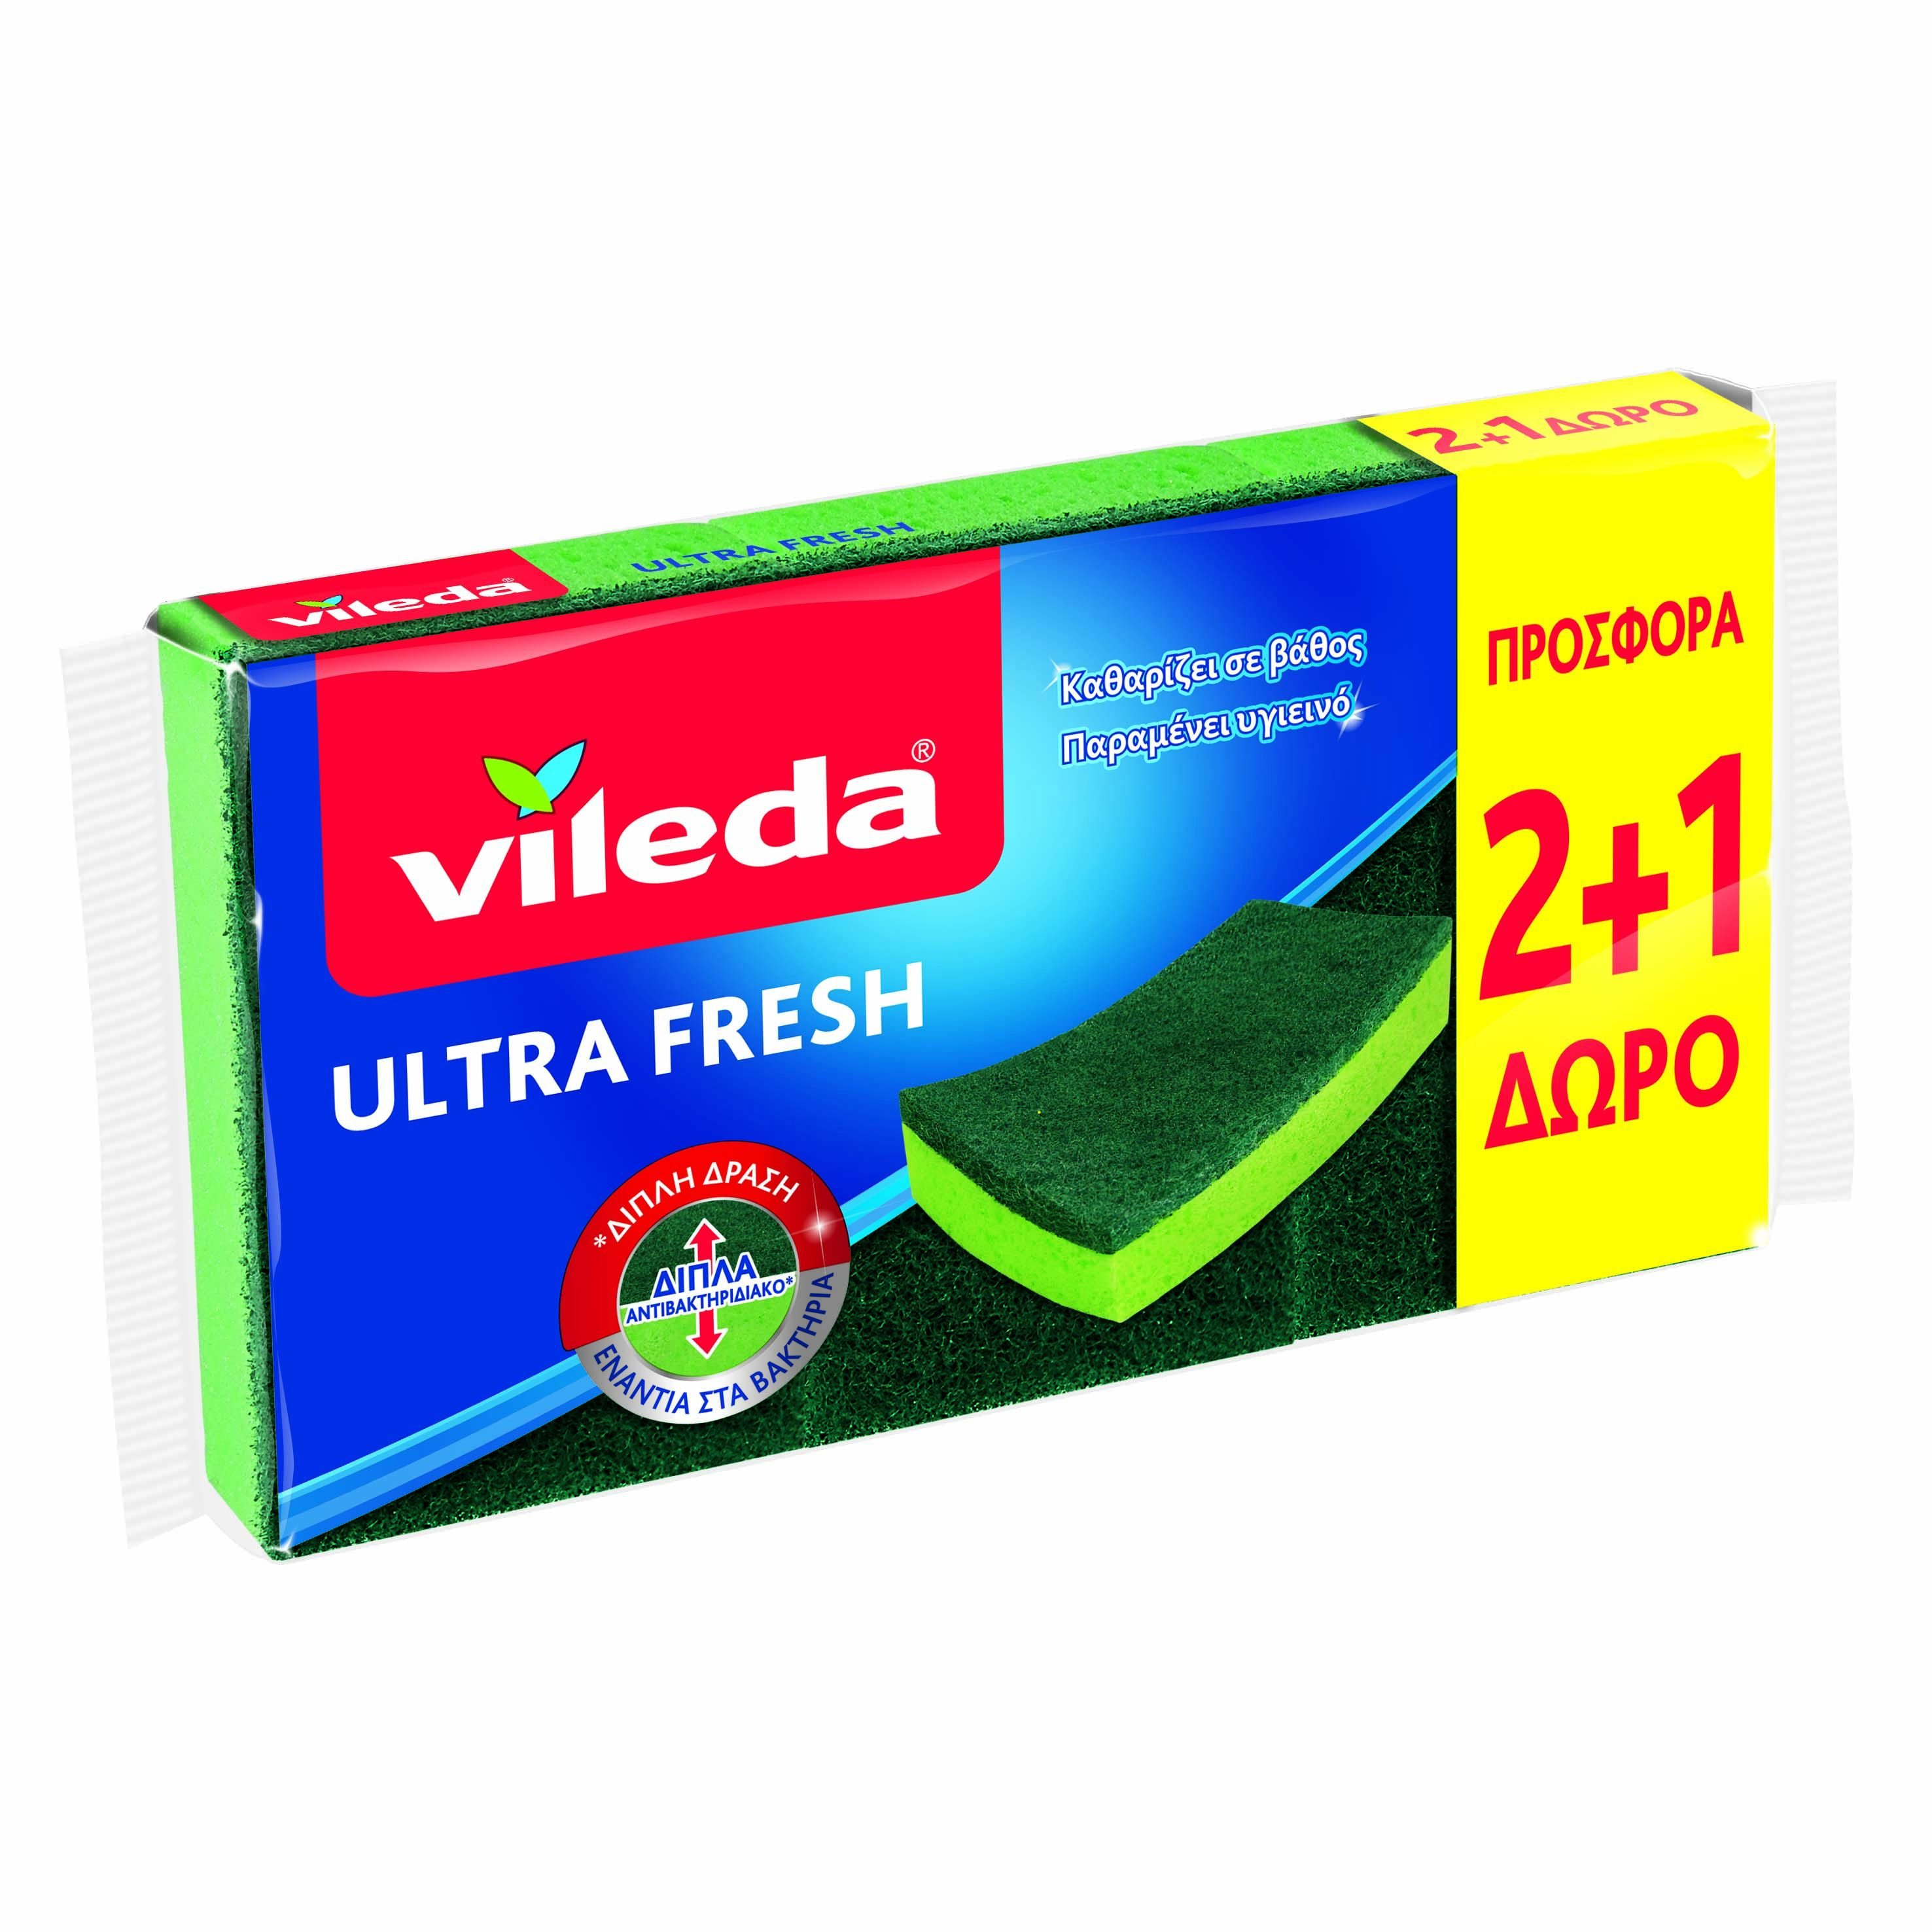 Fhp Σφουγγαράκι Ultra Fresh Vileda (2+1 Δώρο)